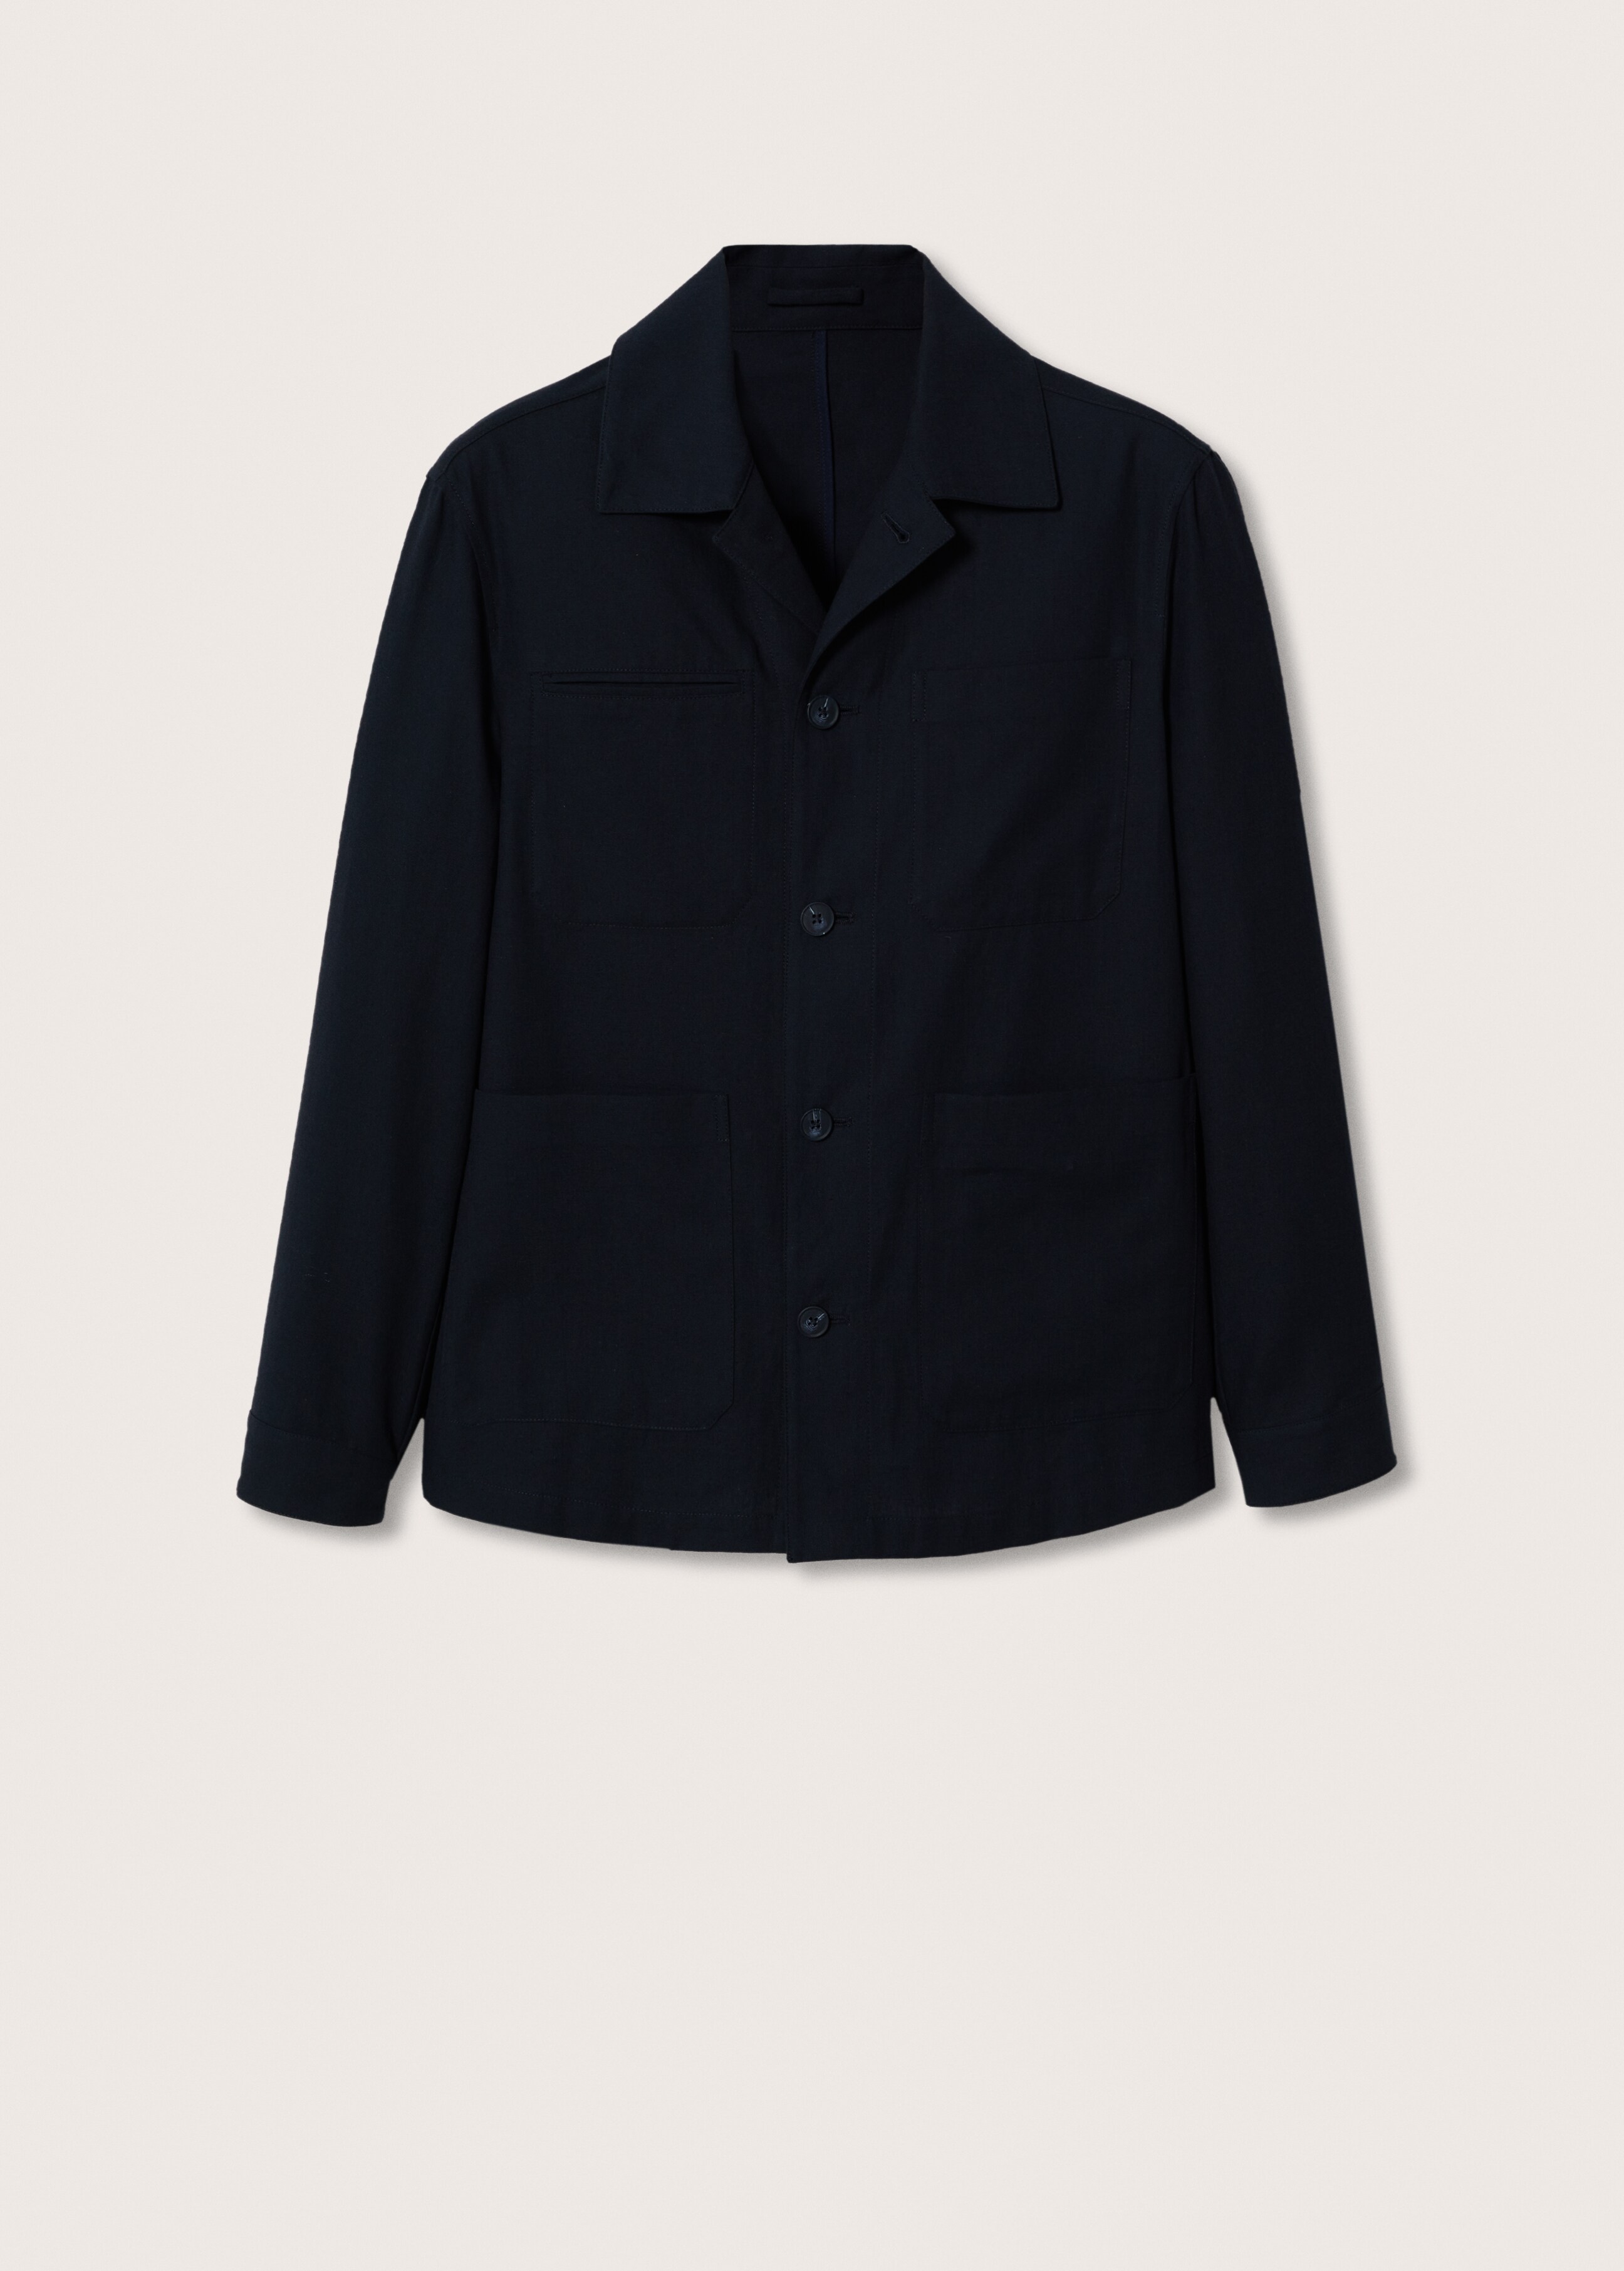 Pocket linen cotton jacket - Article without model